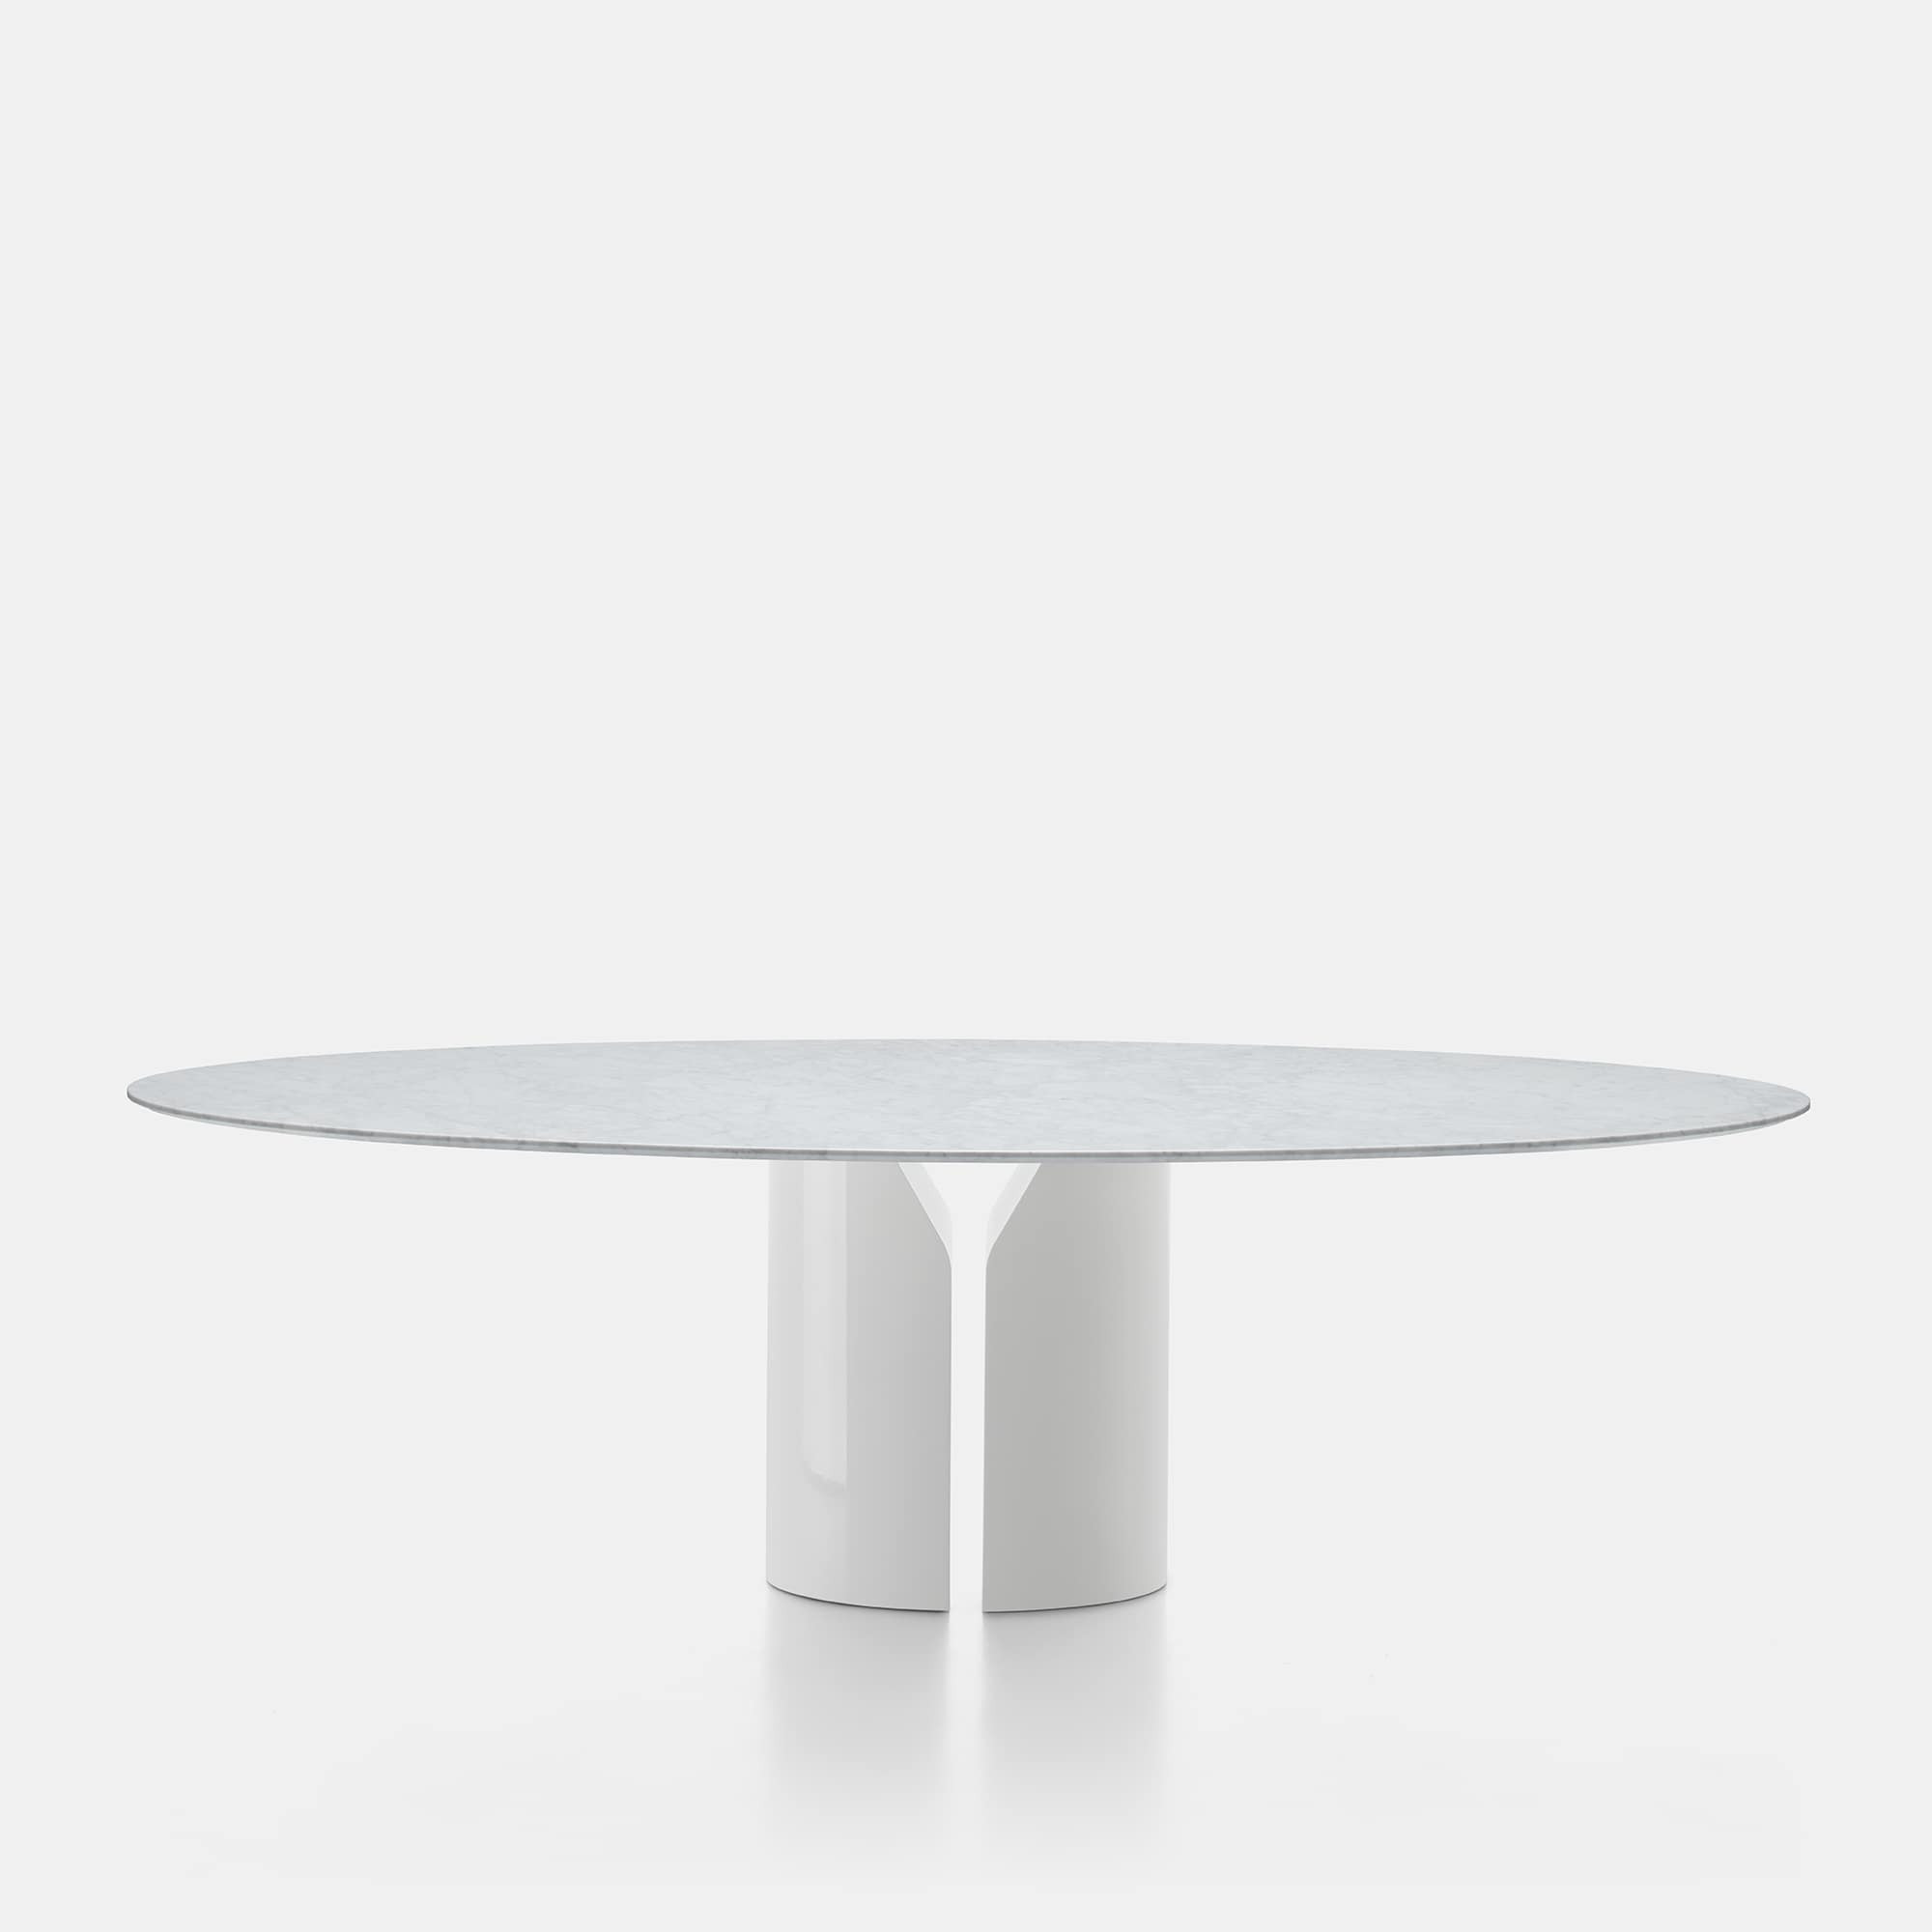 NVL Table ☞ Structure: Matt/Gloss White Lacquered Base ☞ Top: Carrara Matt/Gloss White Marble